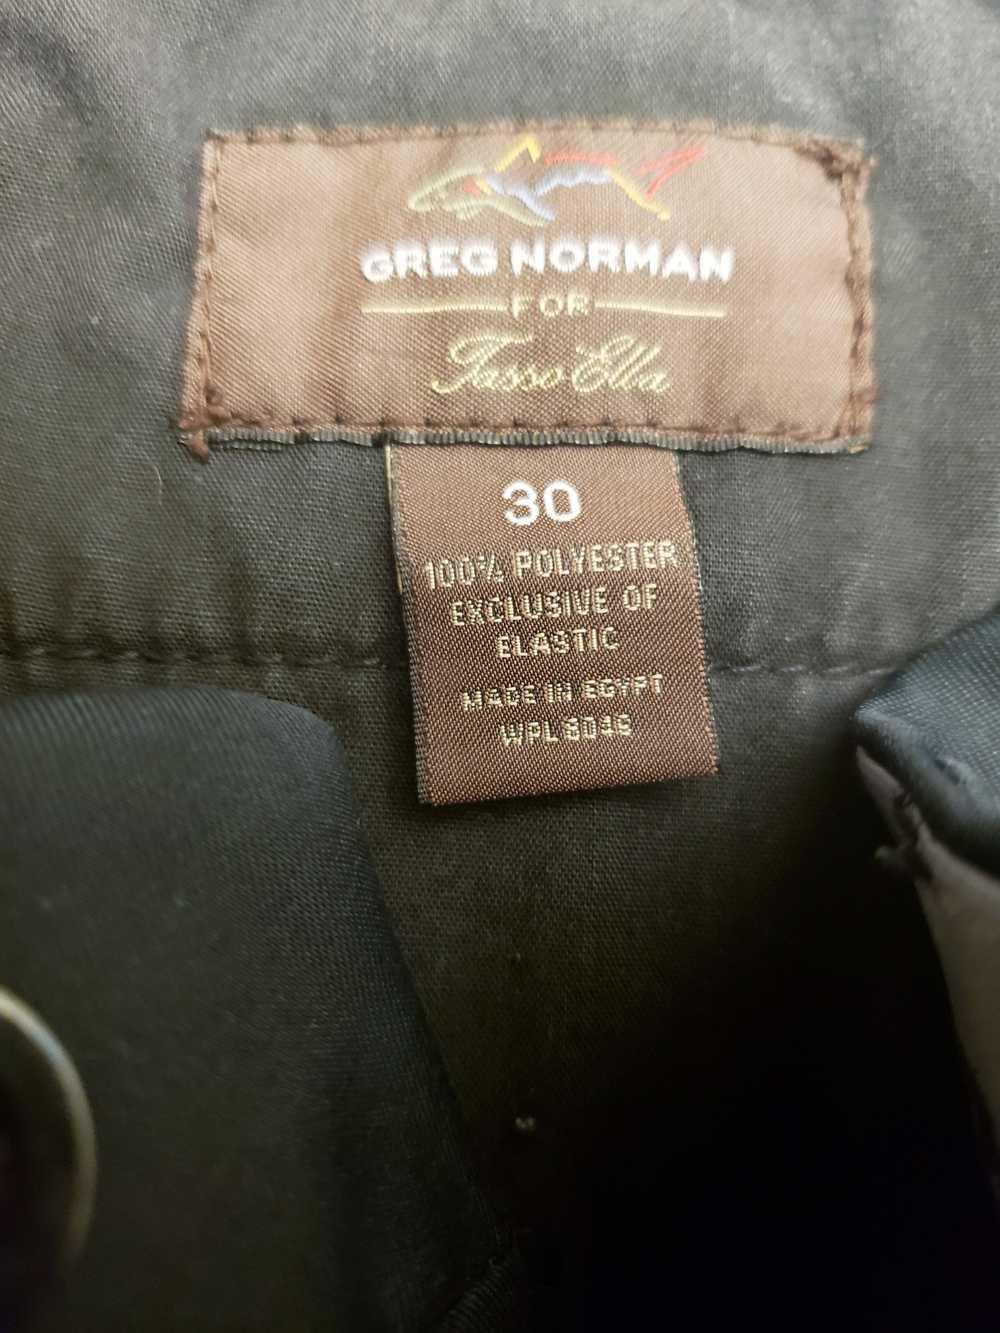 Greg Norman Greg Norman Shorts Size 30 - image 5